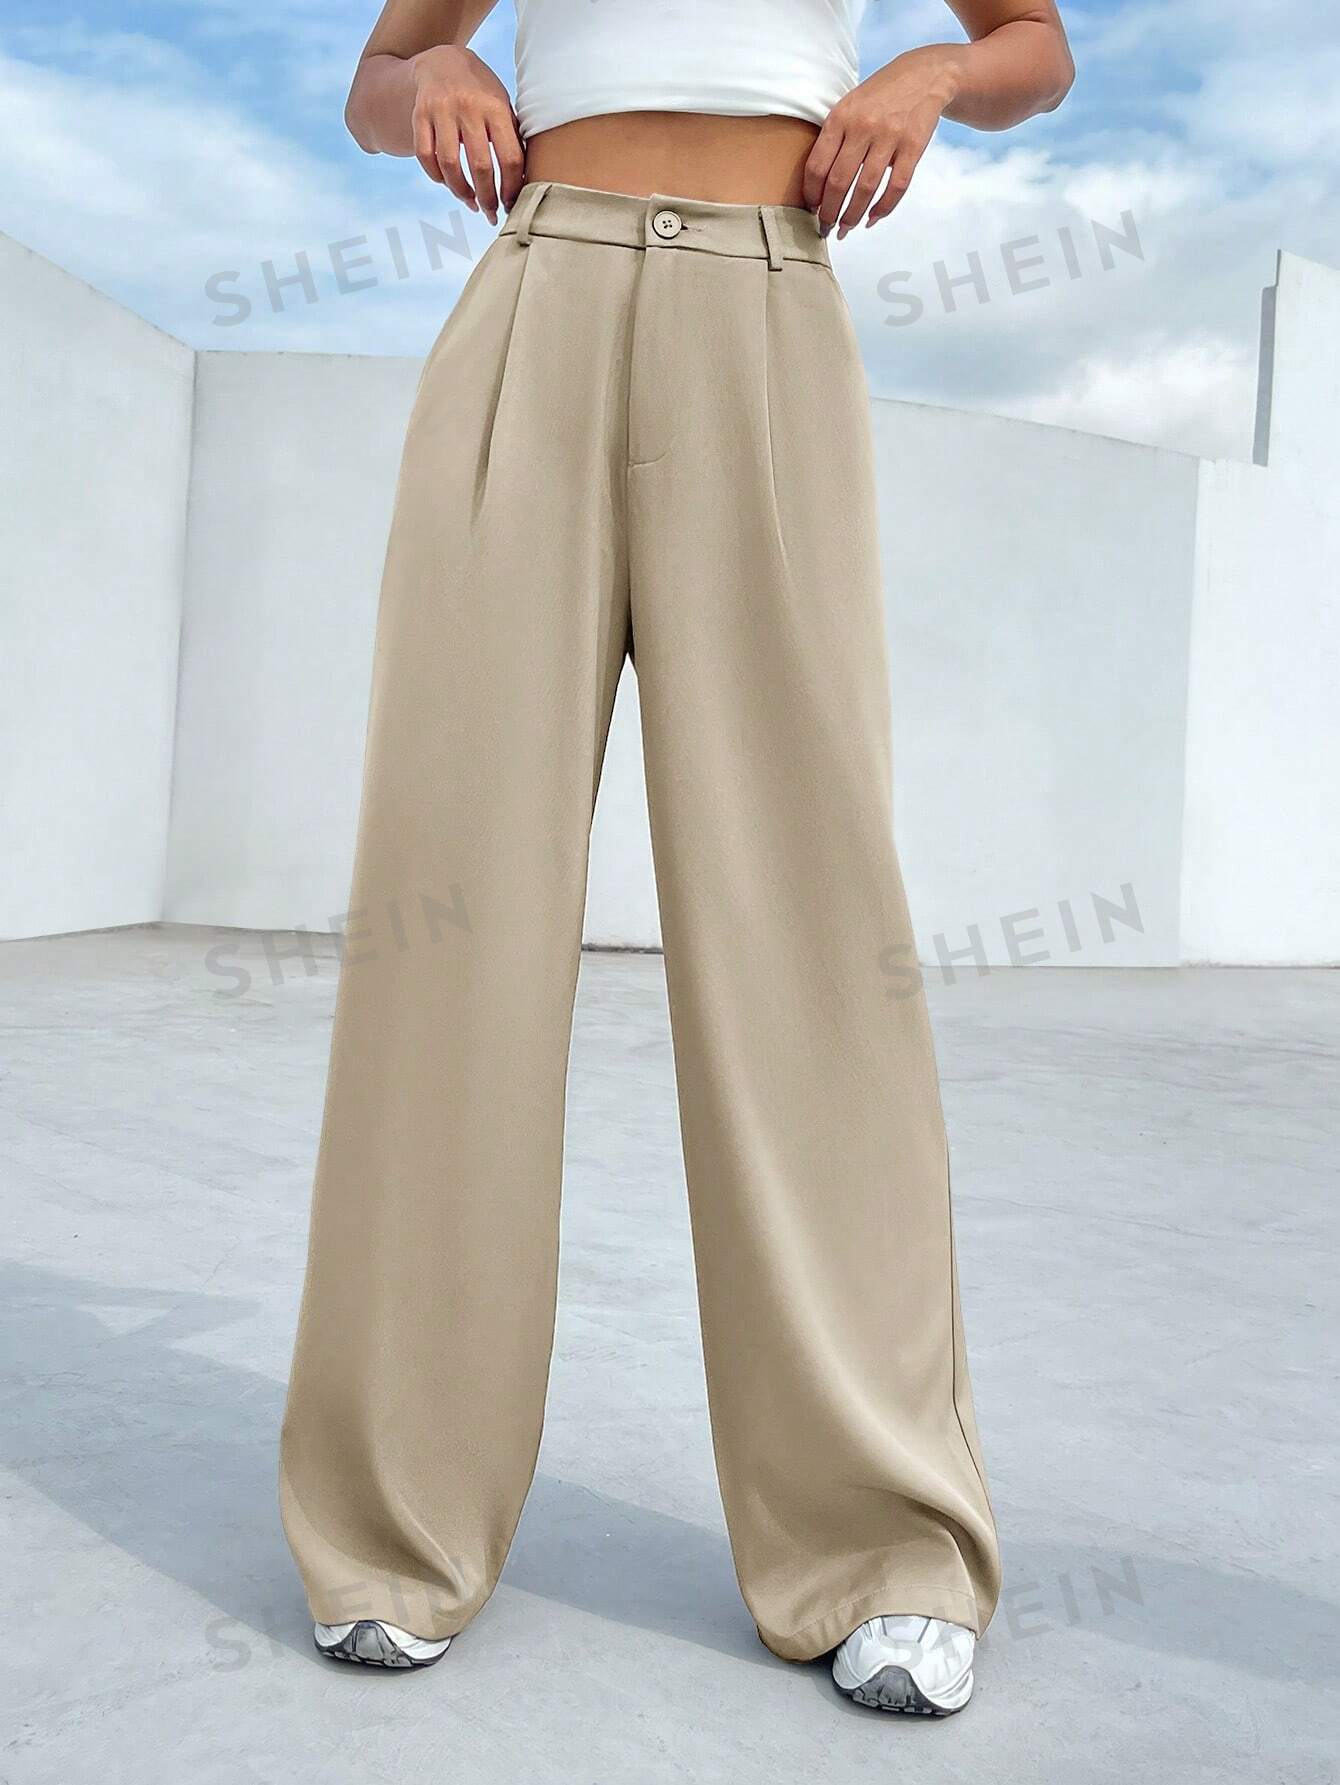 SHEIN EZwear Женские тканые широкие брюки со складками и складками, хаки